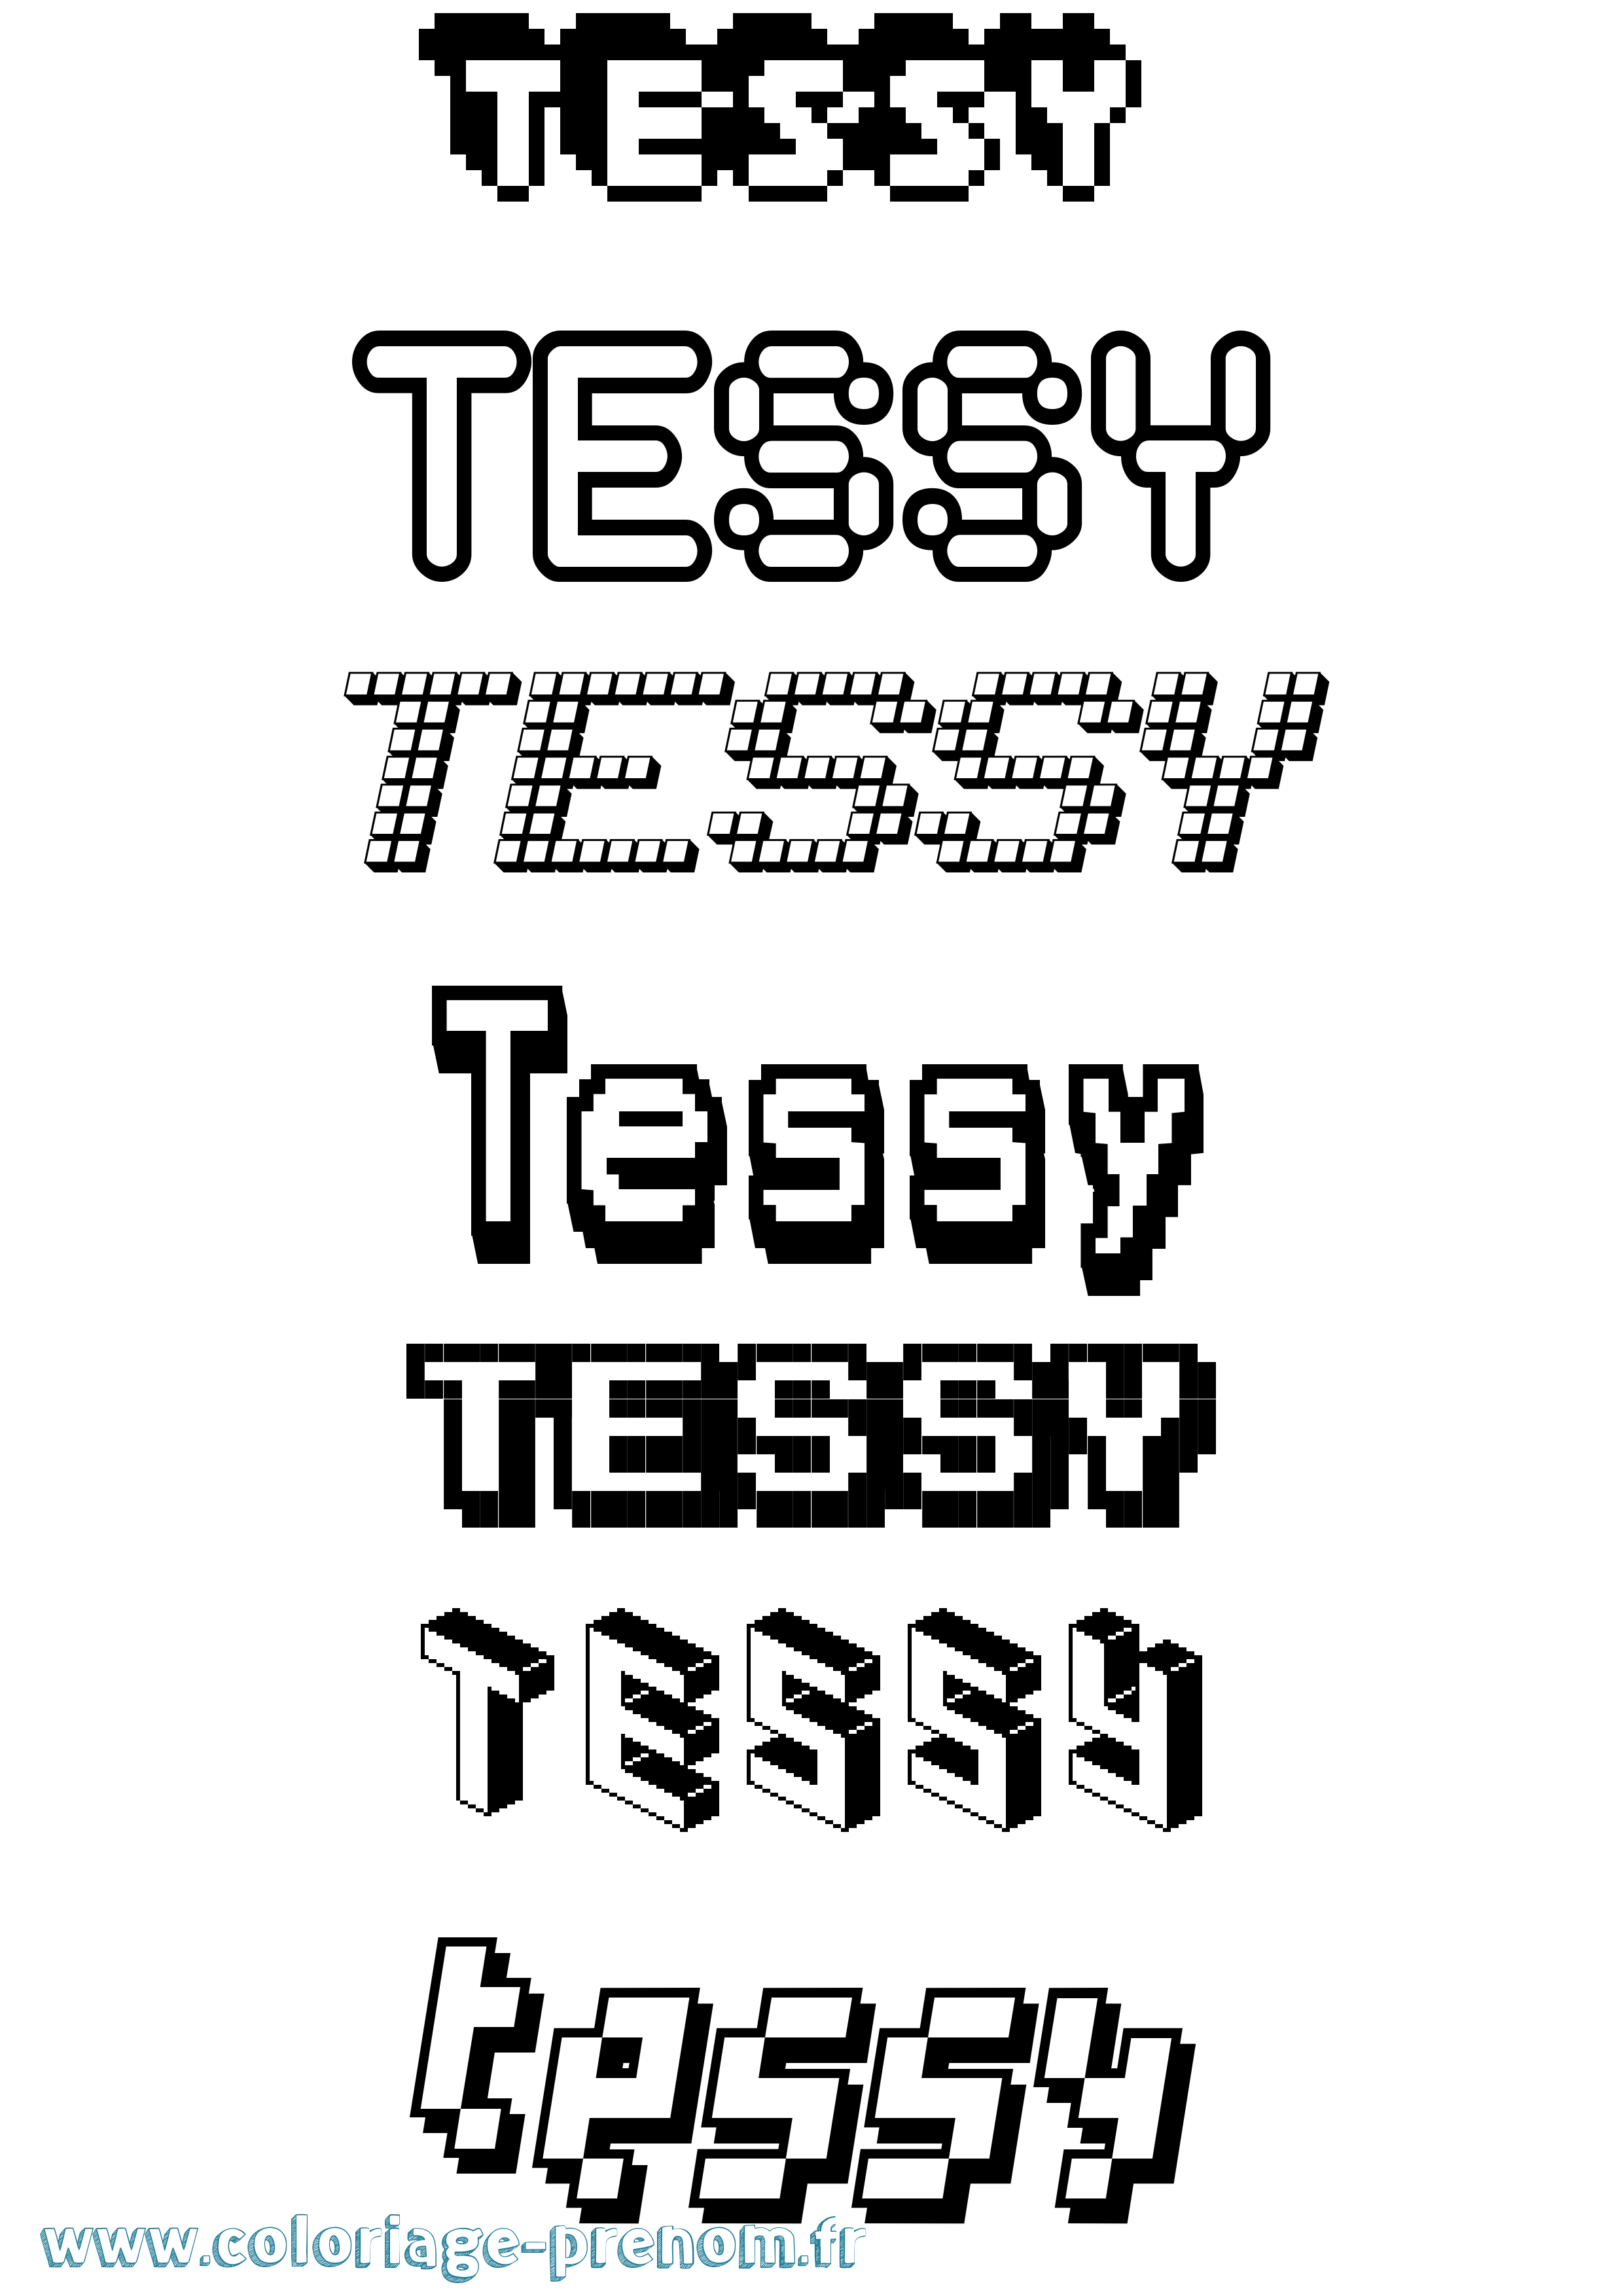 Coloriage prénom Tessy Pixel